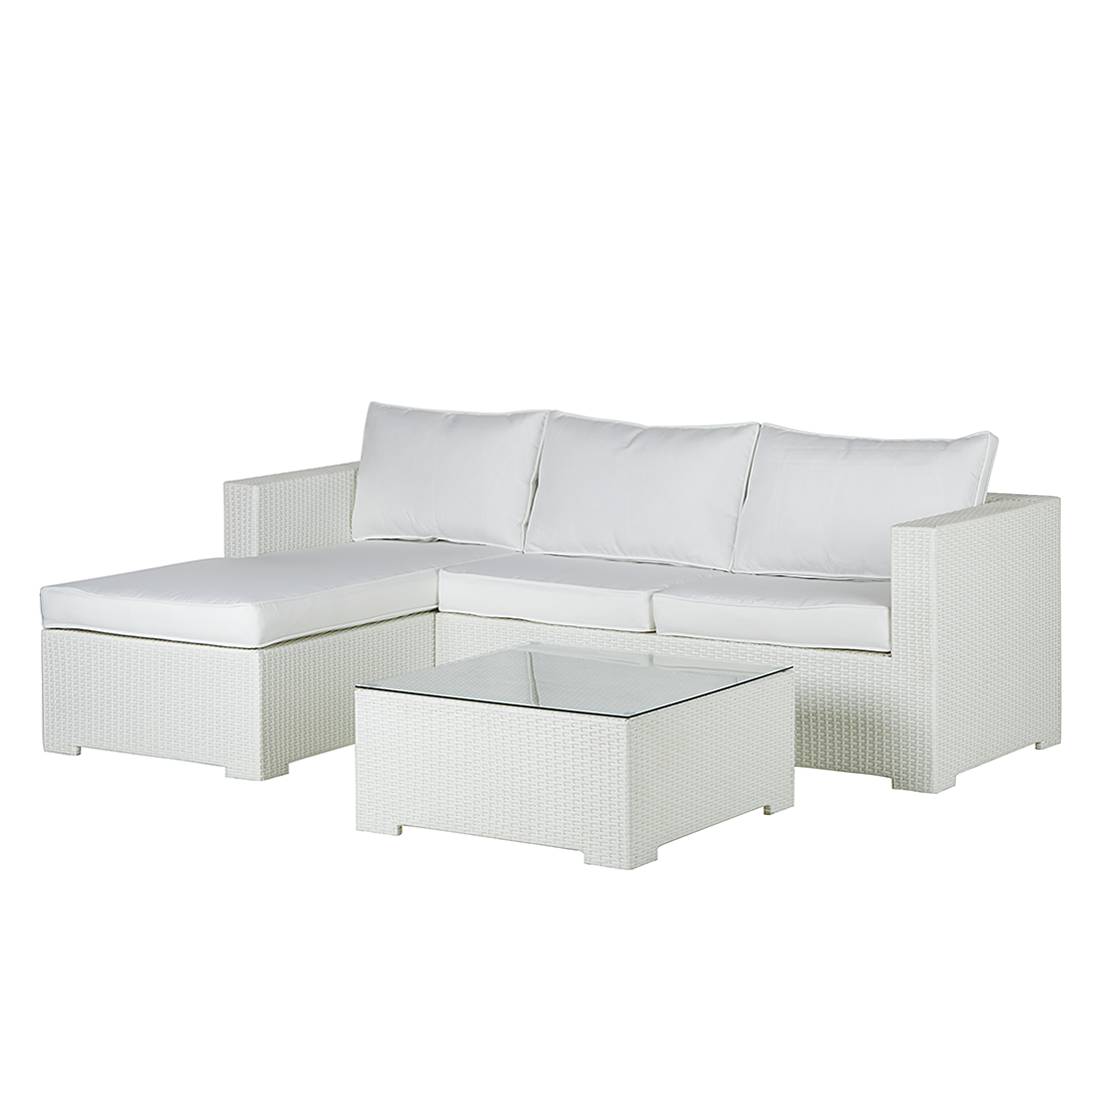 Lounge Sitzgruppe White Comfort (3-teilig) - Polyrattan/Textil - Weiß, Kings Garden